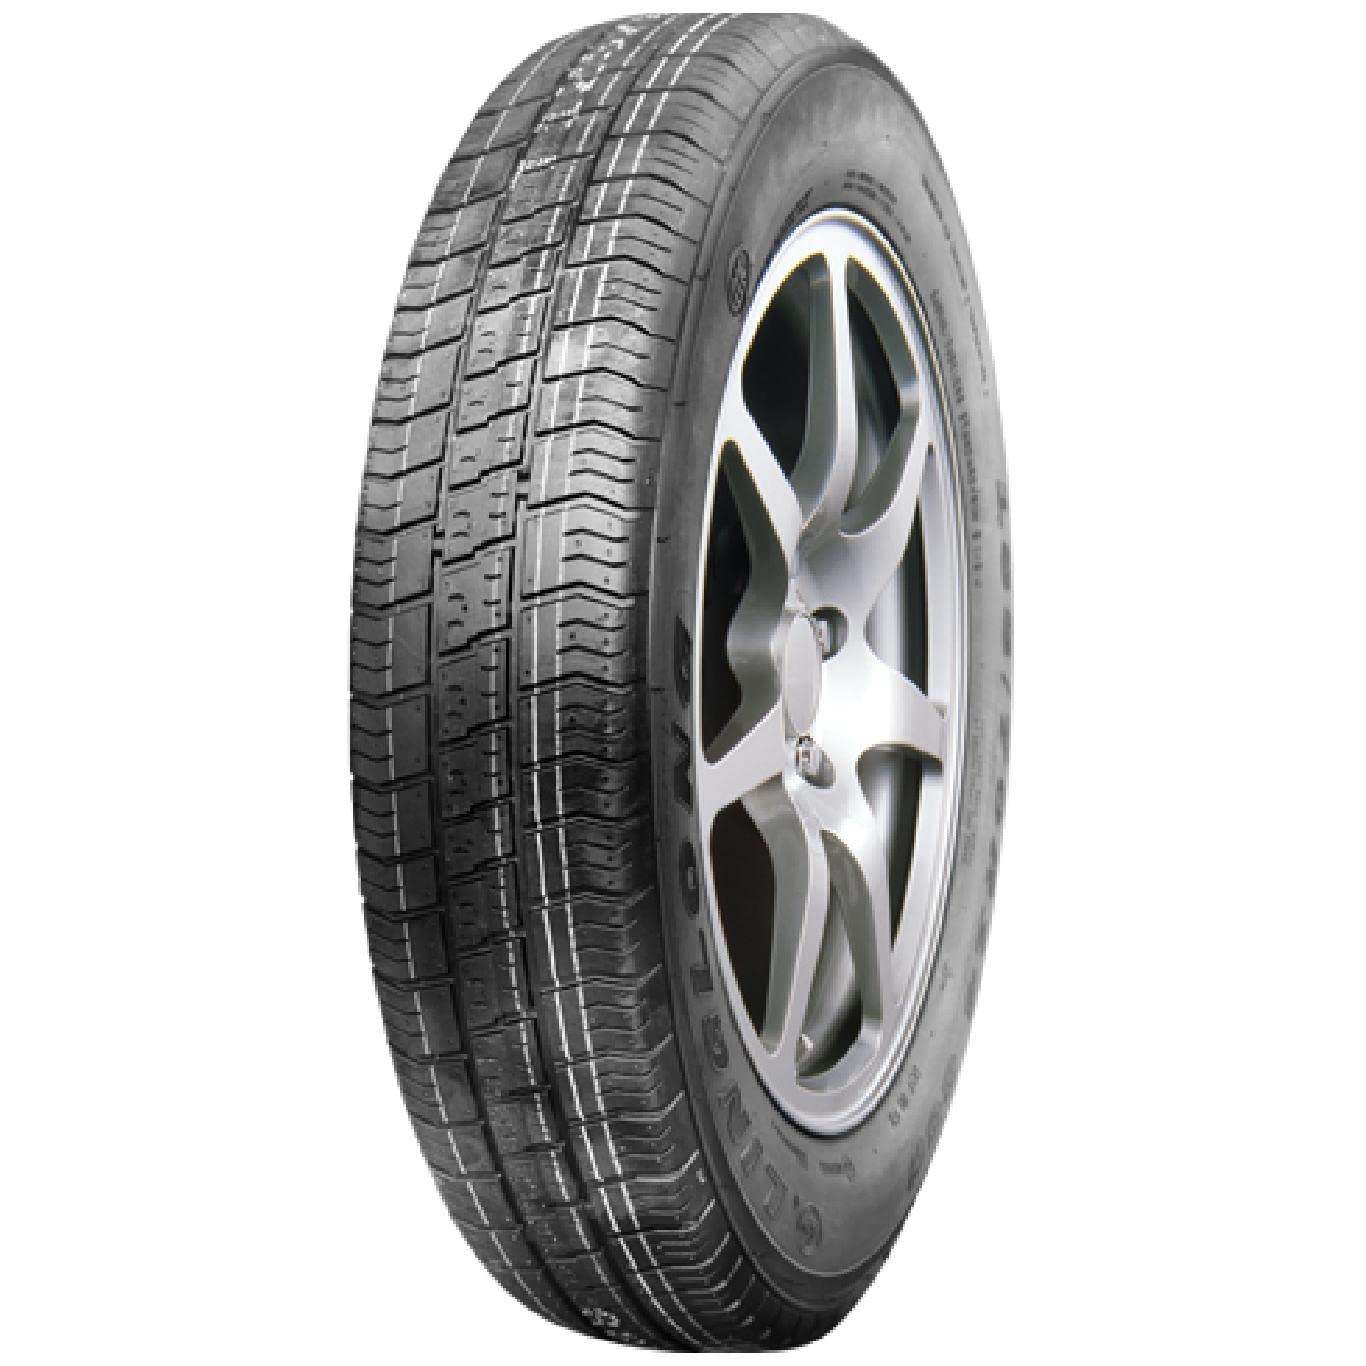 125/80R17 99M Ling Long T010 Notrad-Reifen Spare-Tyre Reifen Sommer PKW von Linglong